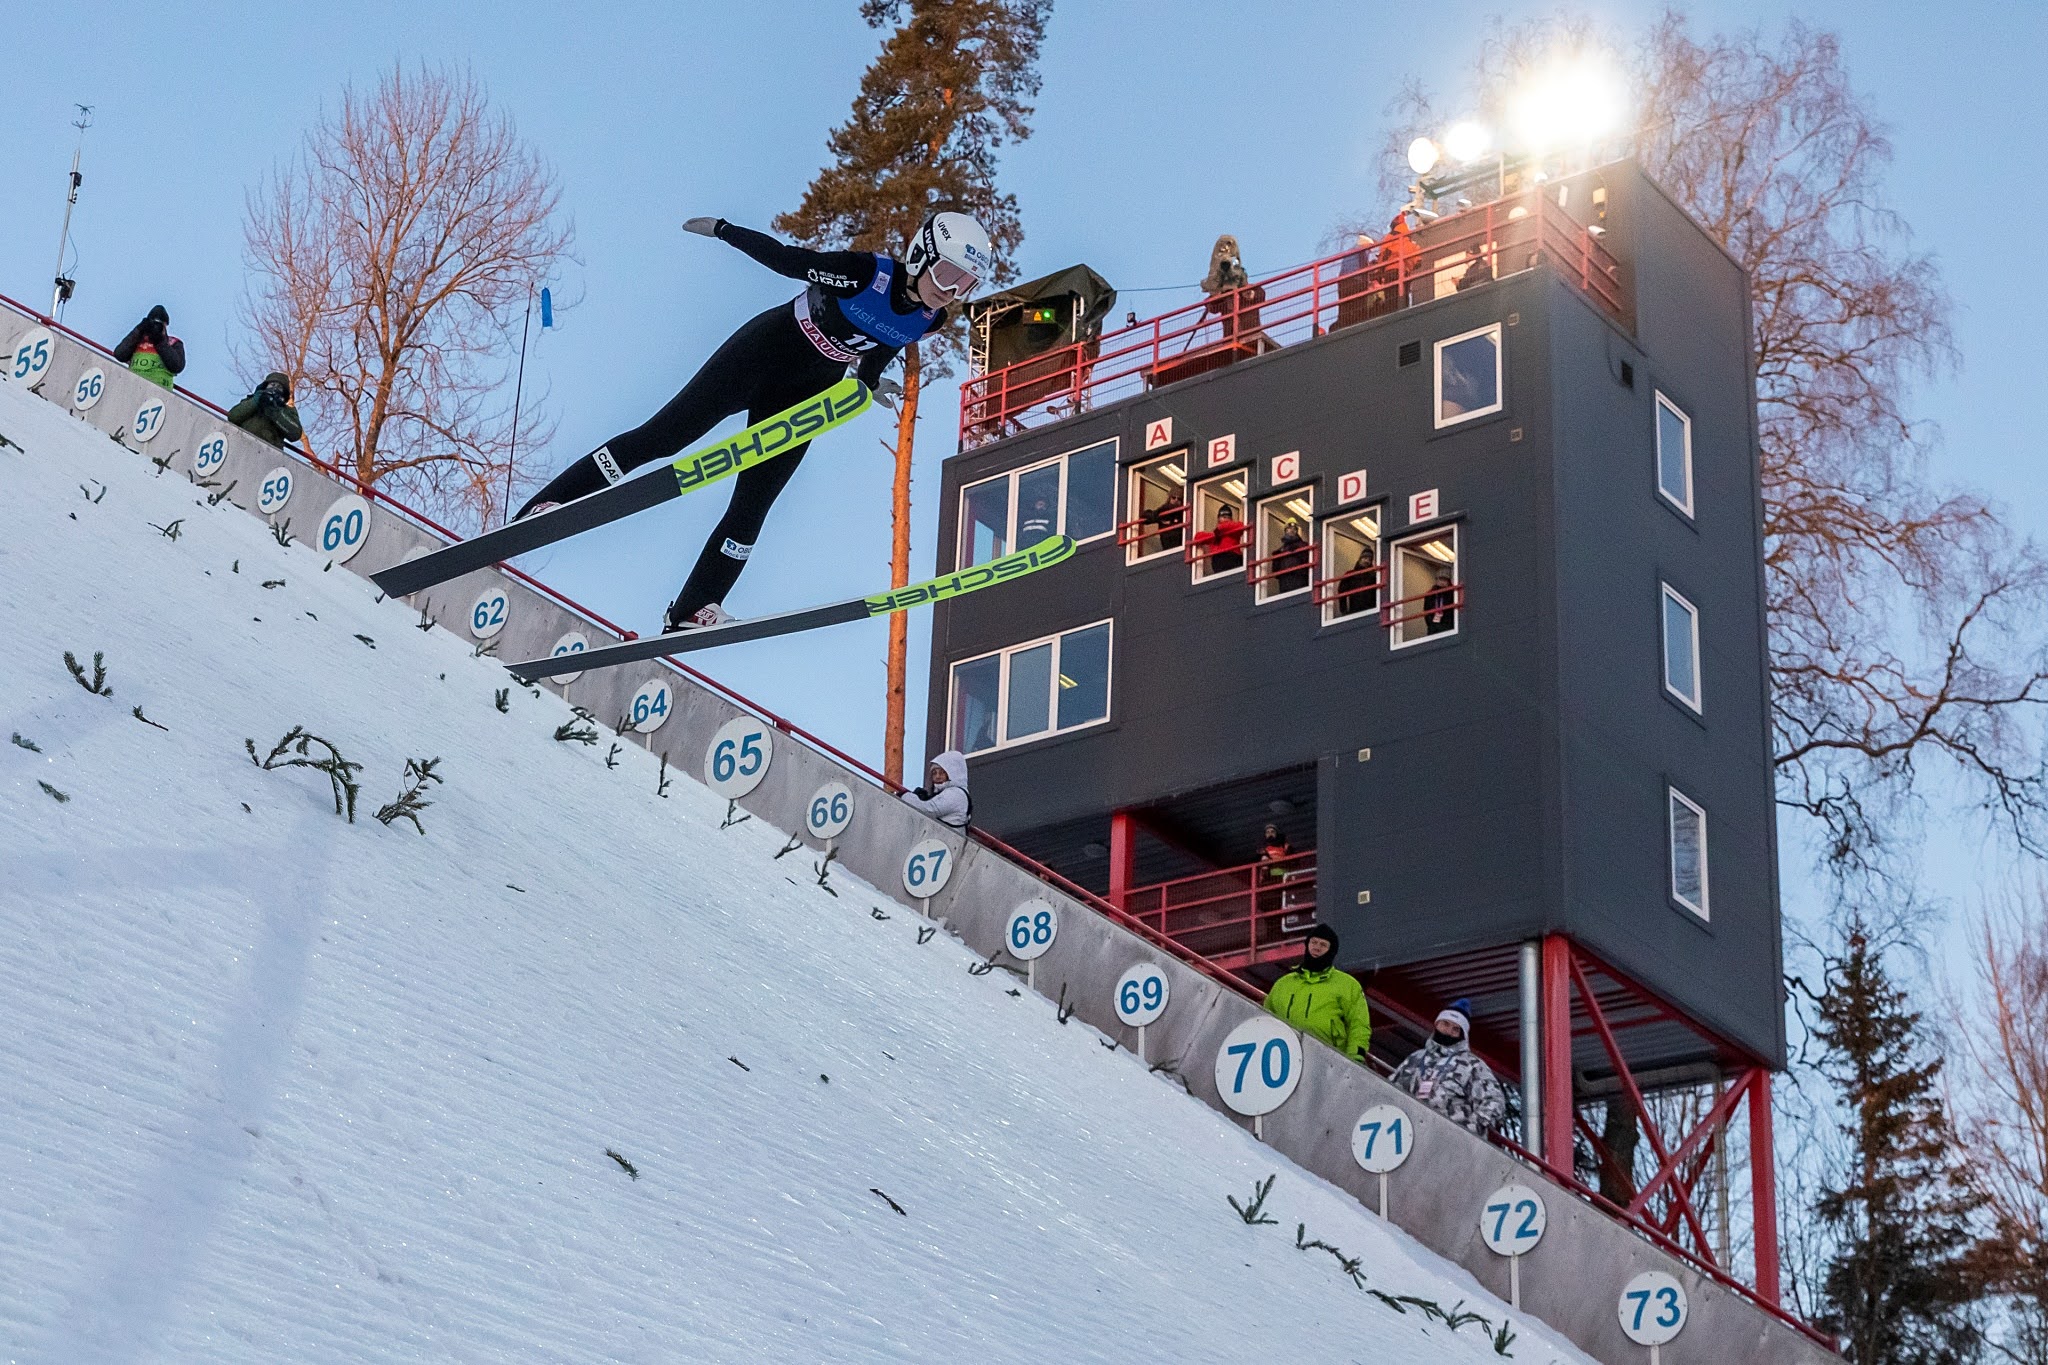 The world’s best skiers arrive in Otepää